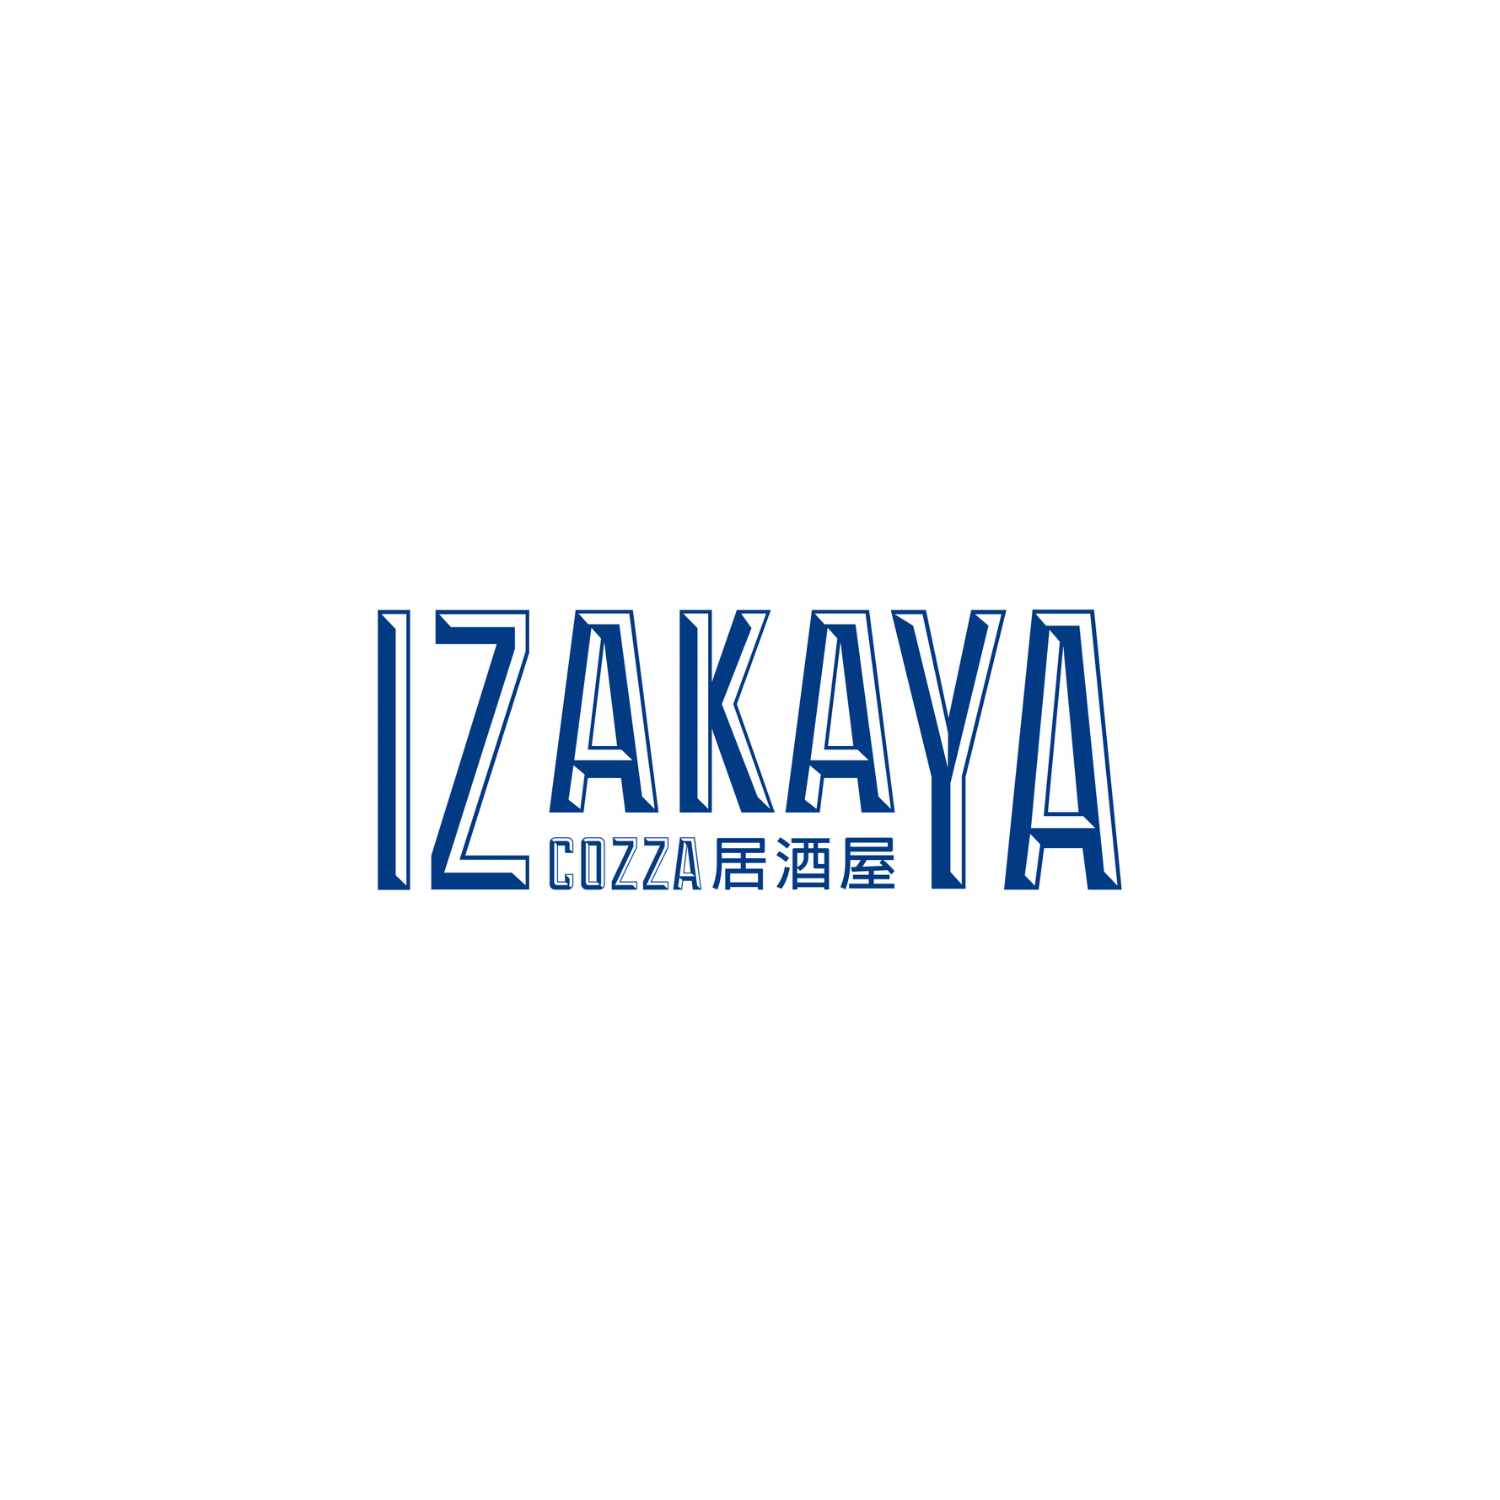 izakaya-cozza-monaco-carlo-app-comerciante-restaurante